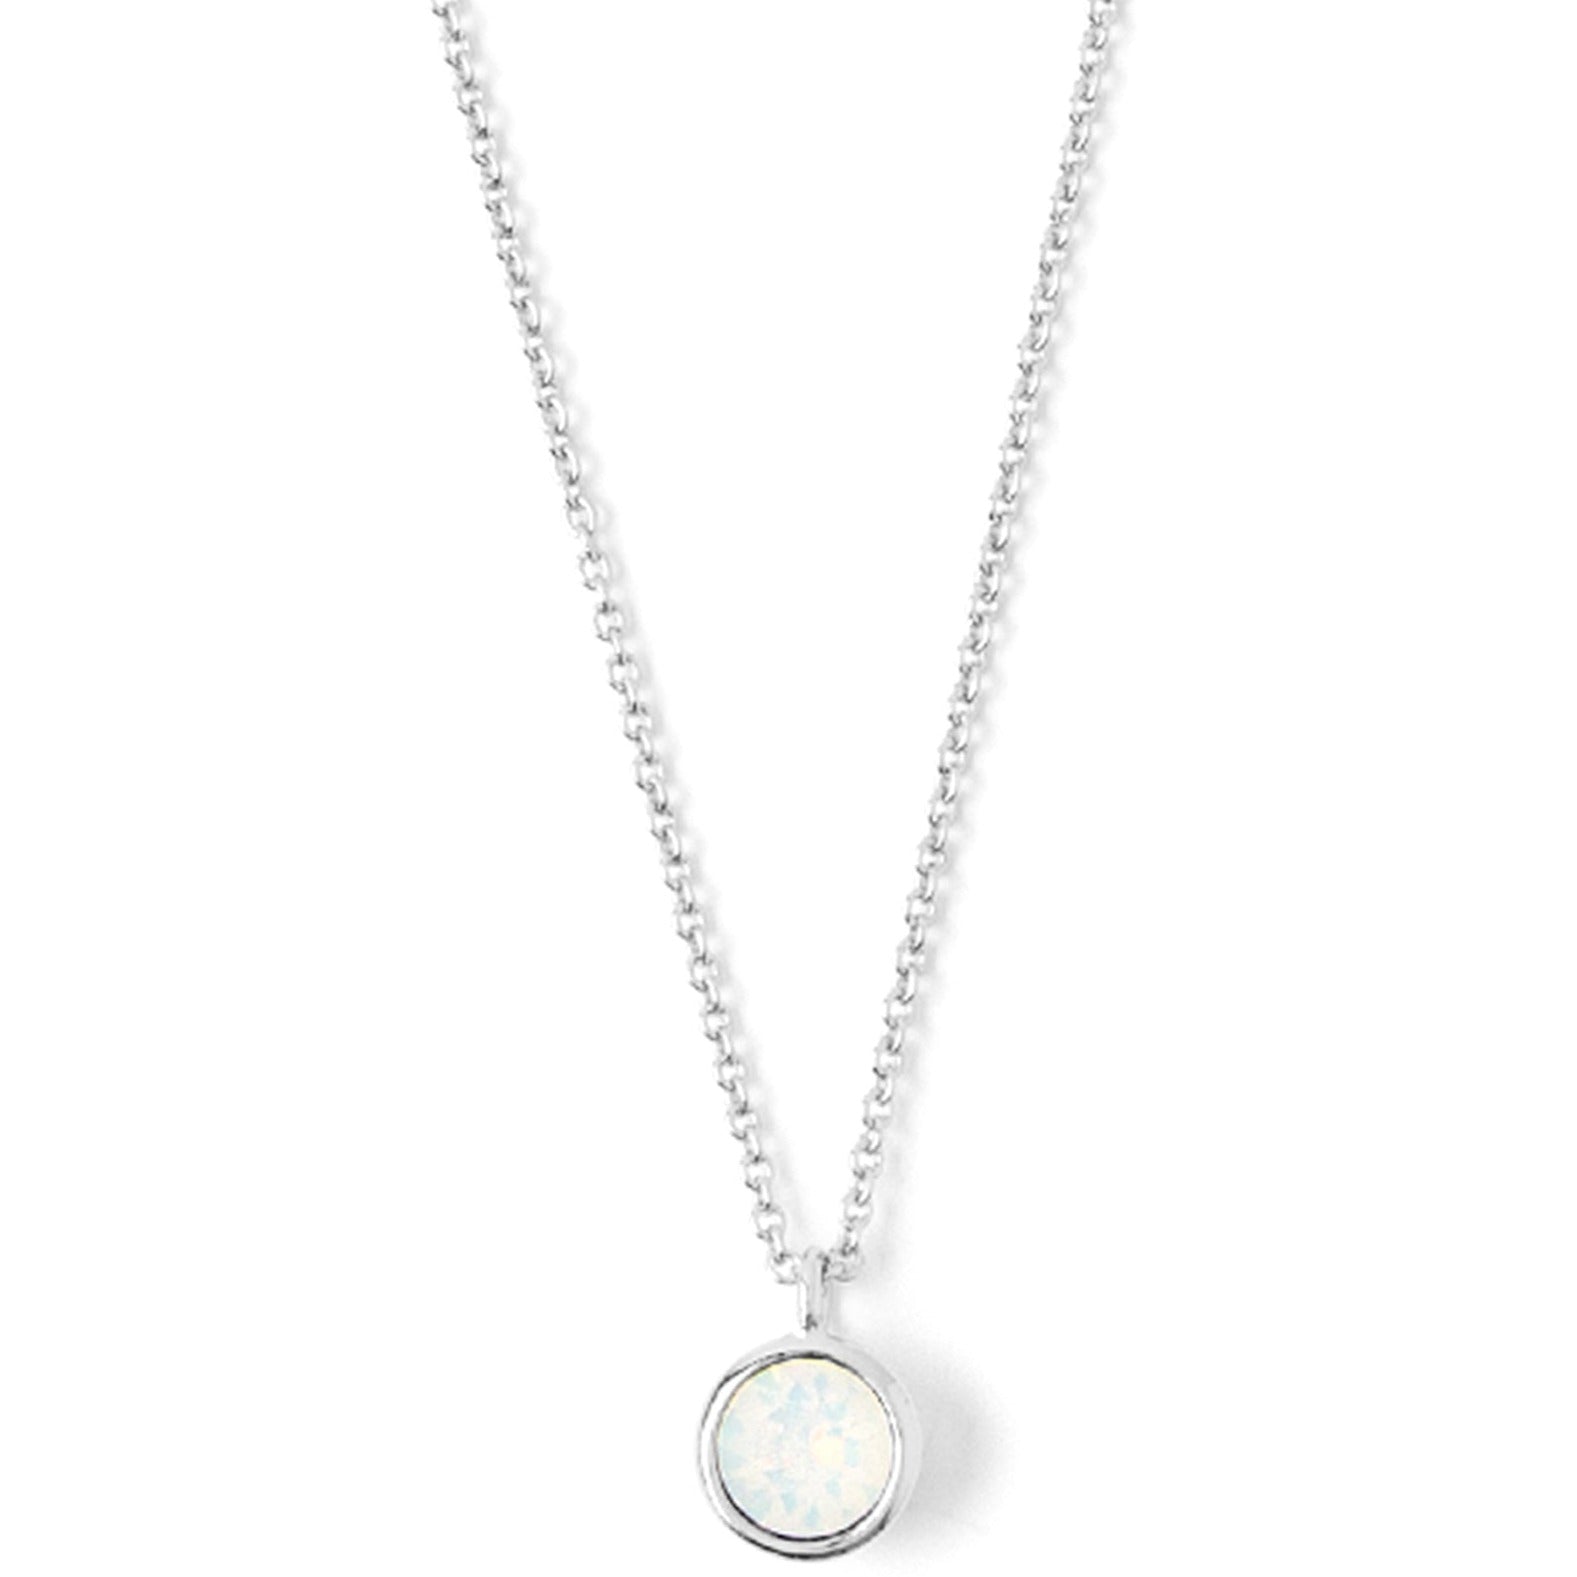 White Opal Necklace Made With Swarovski Crystals - Silver - Orelia London